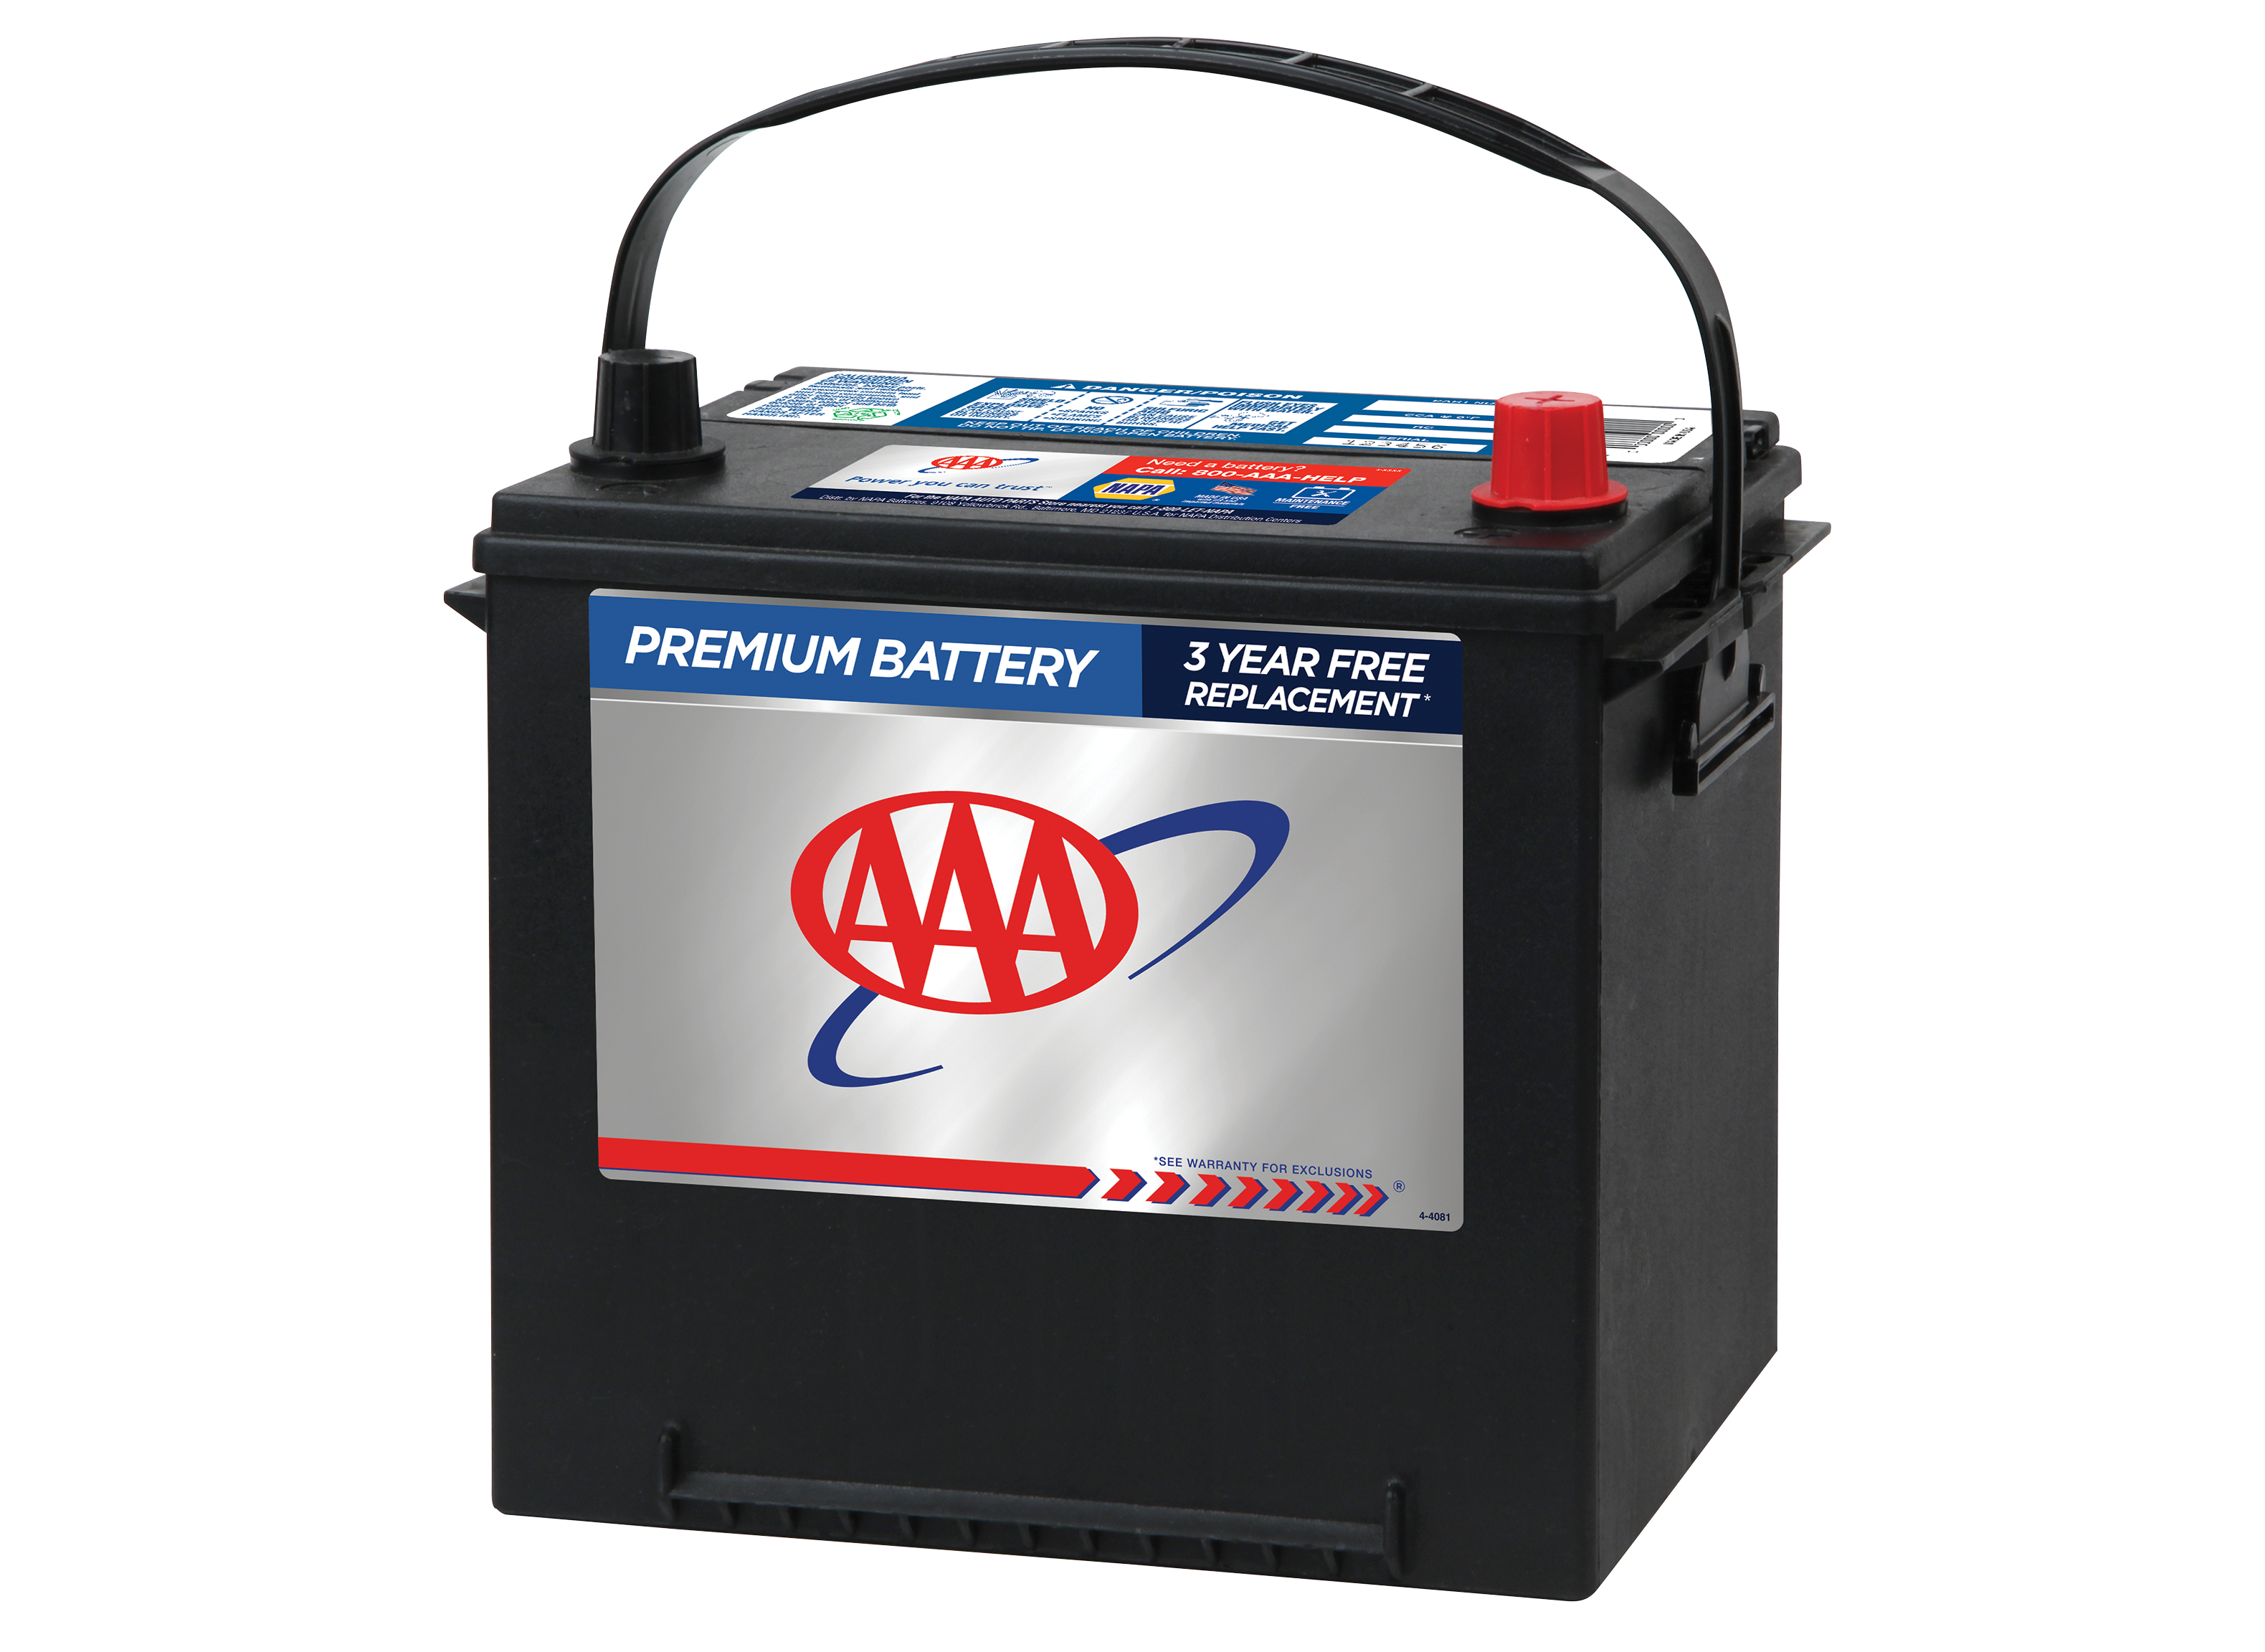 AAA Premium BAT 8435AAA Car Battery Review - Consumer Reports